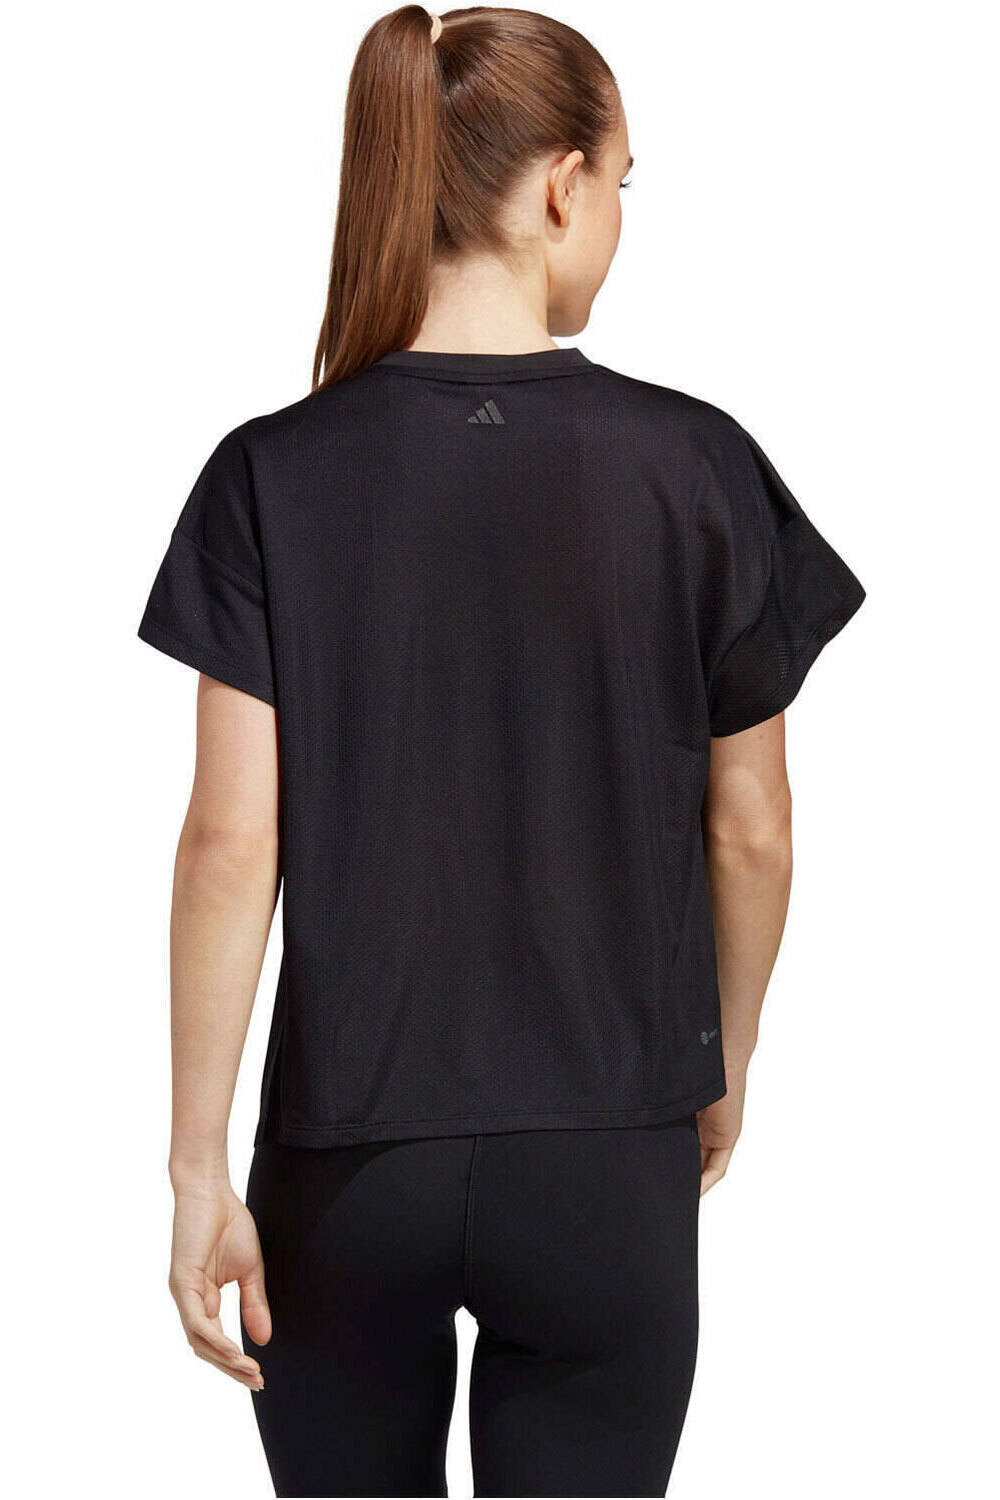 adidas camisetas fitness mujer HIIT AEROREADY Quickburn Training vista trasera